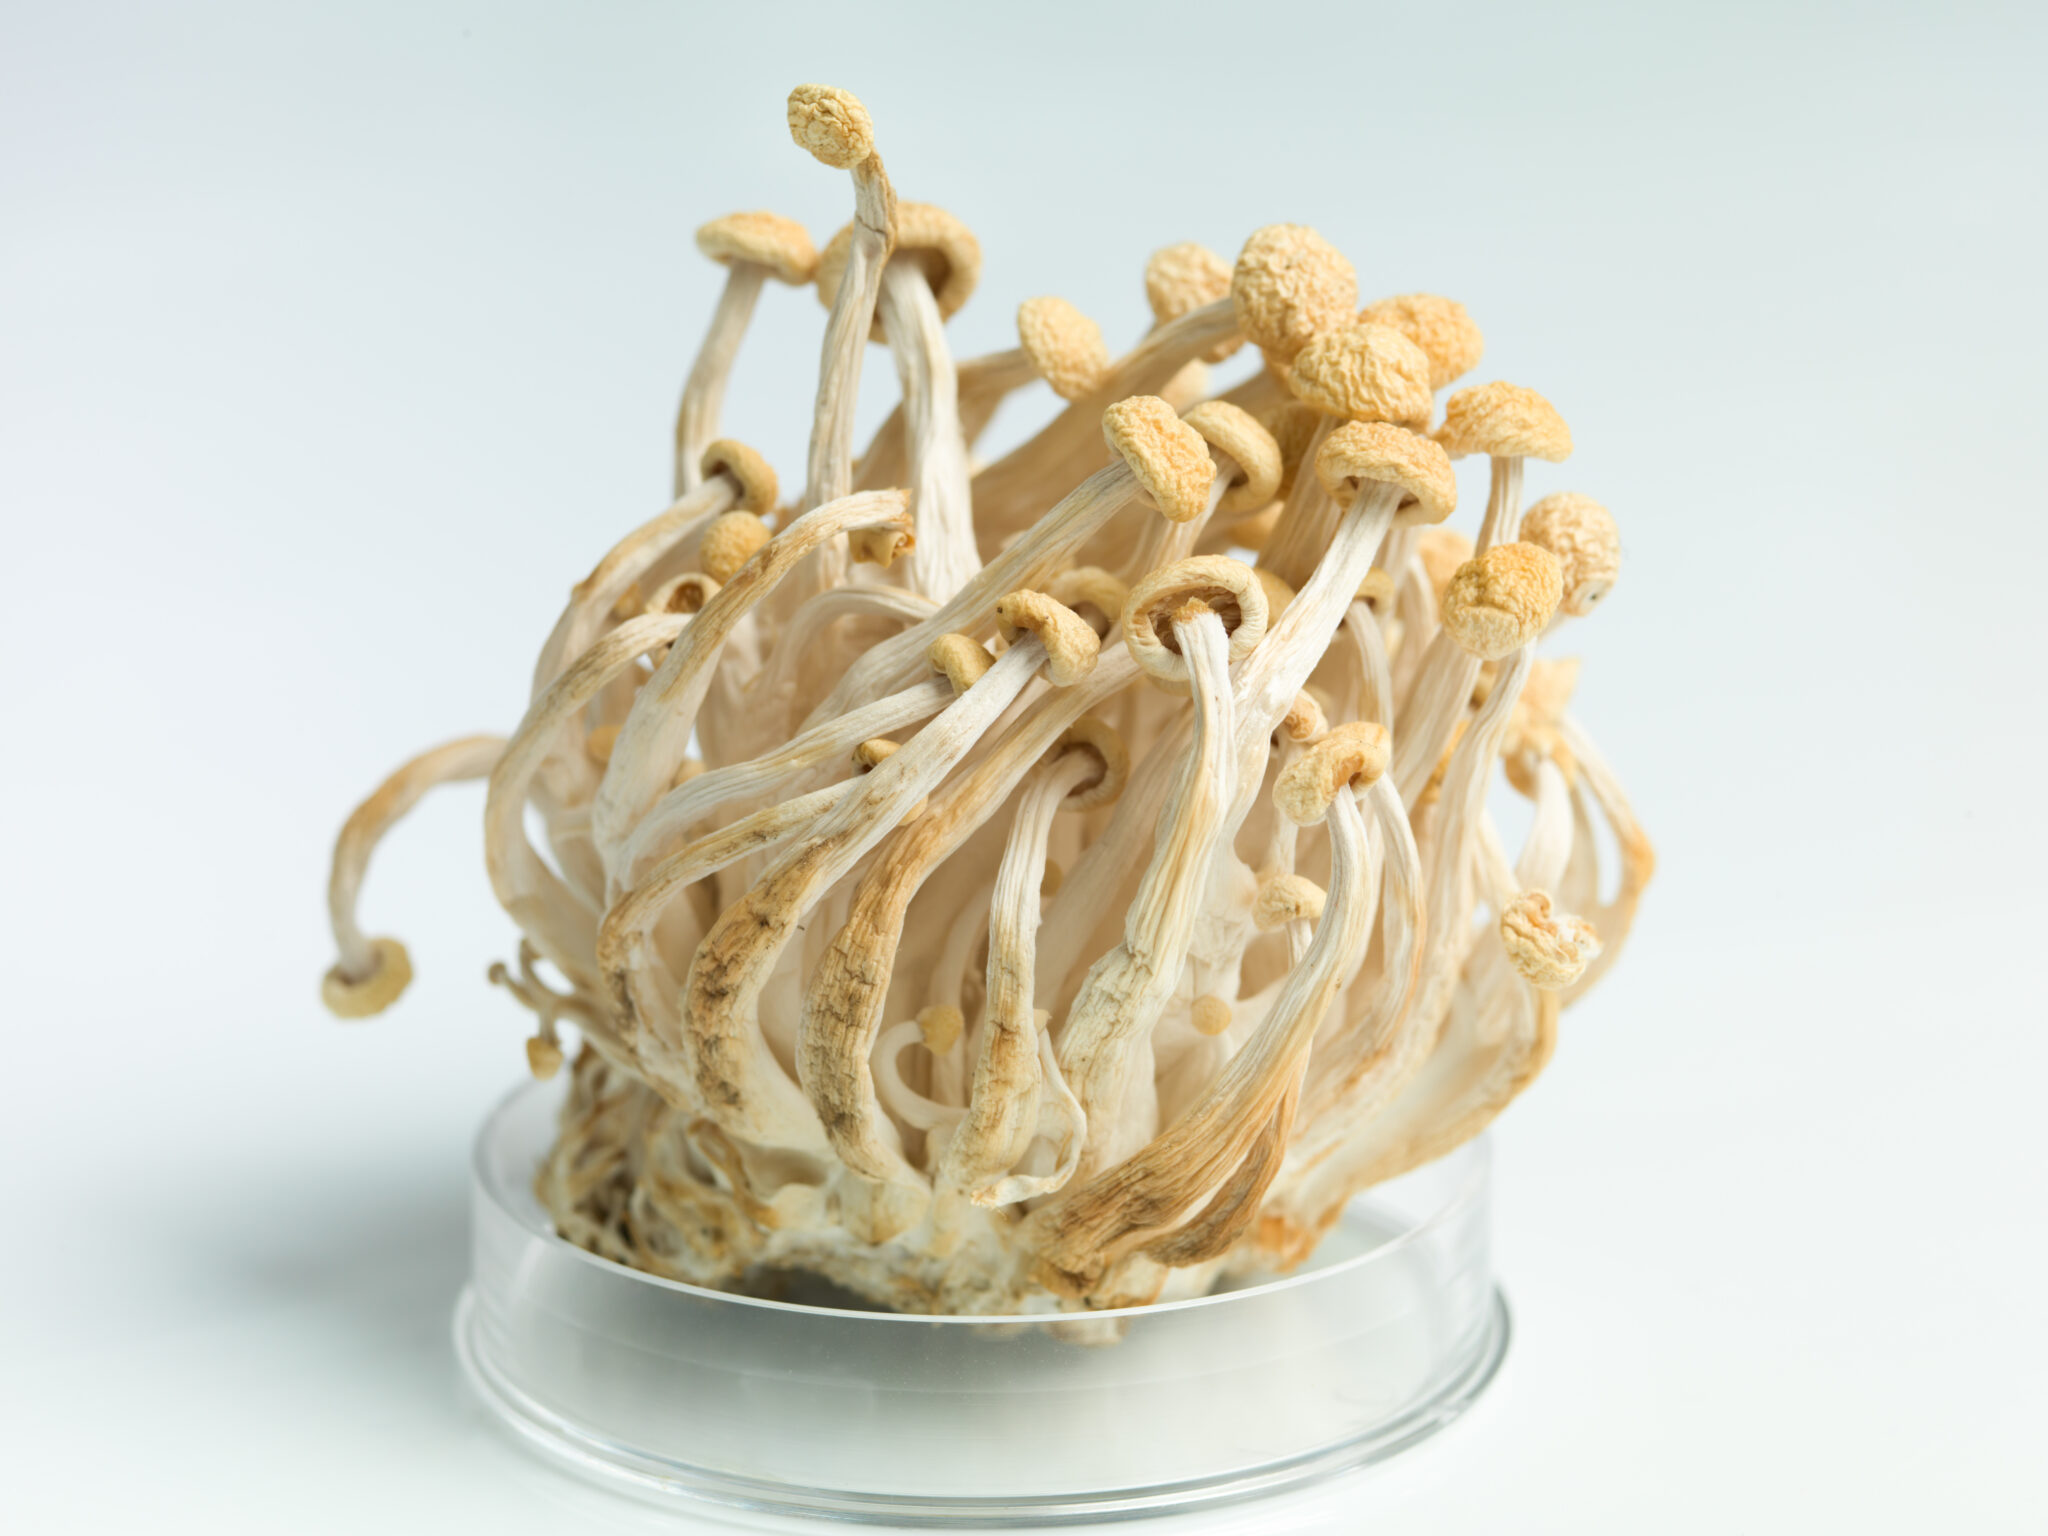 petri dish containing an enoki mushrooms cluster